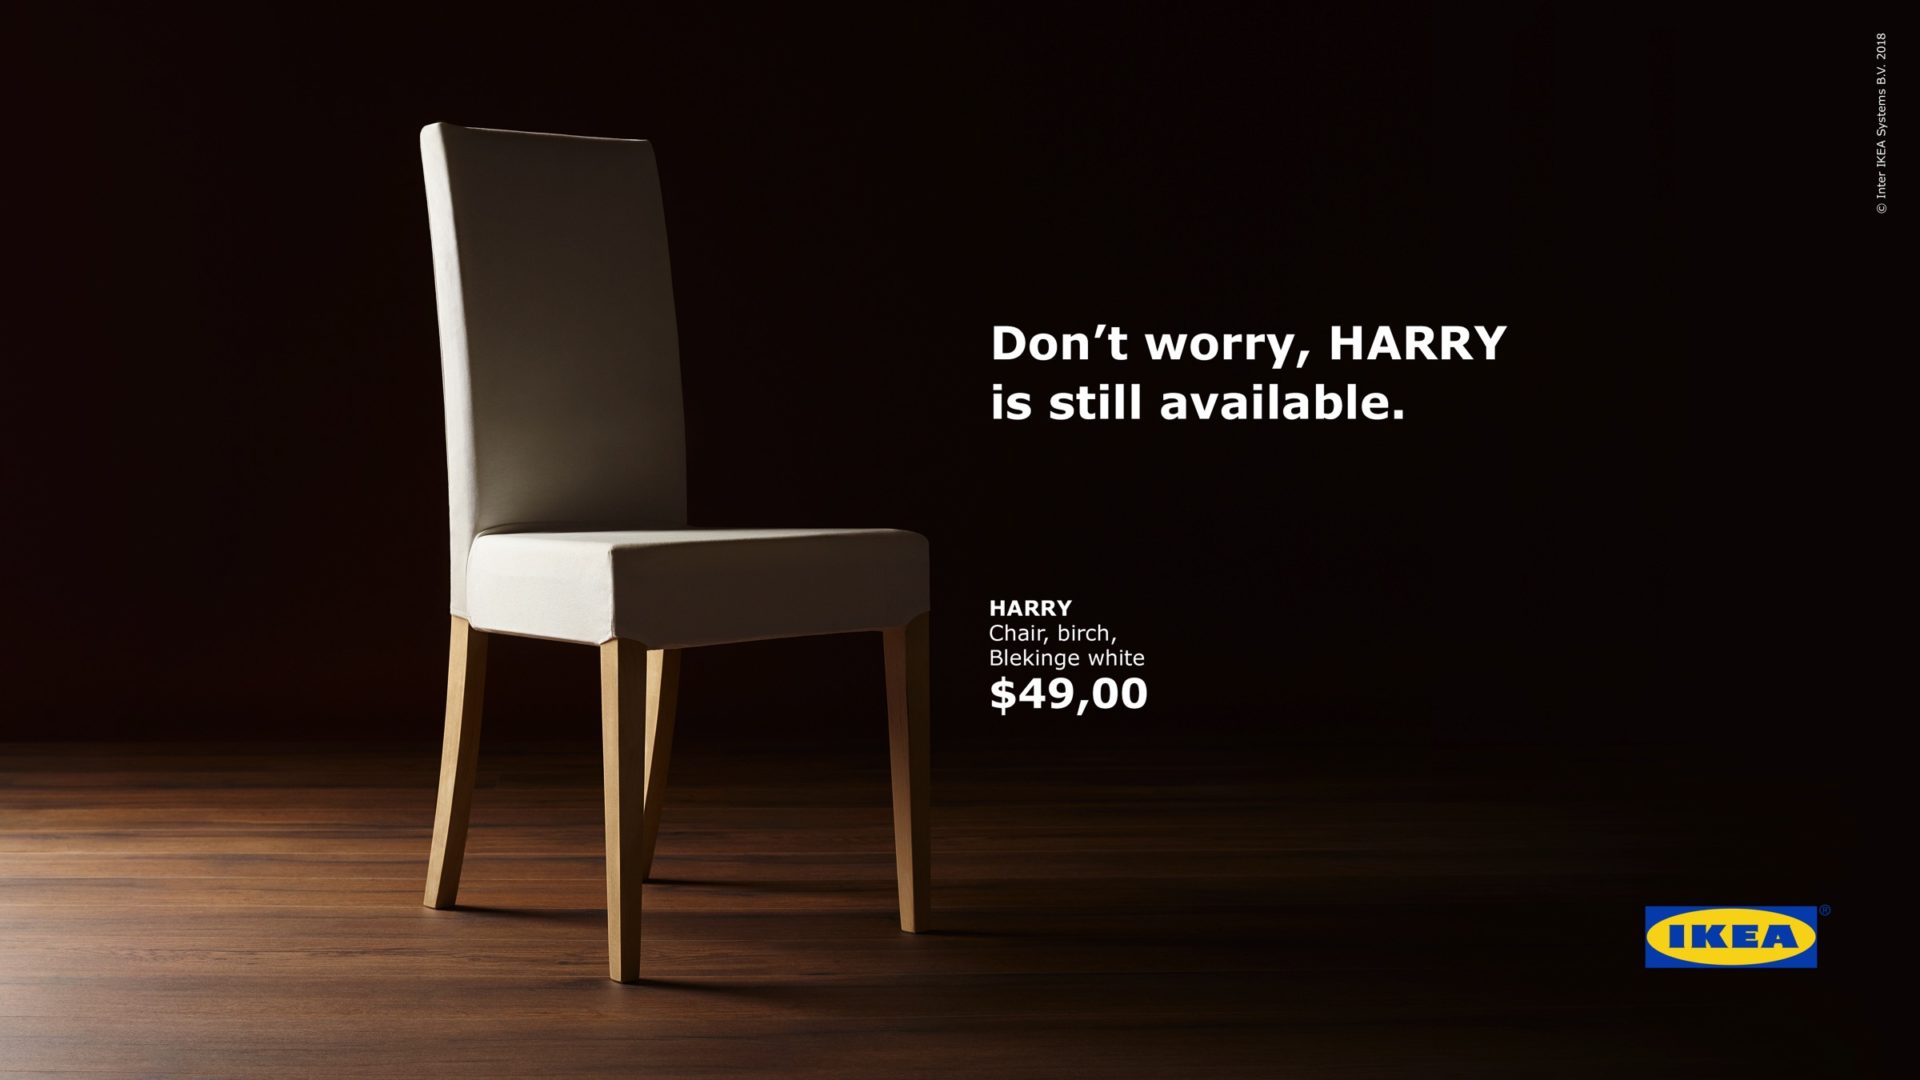 Reklama IKEA krzesło Harry